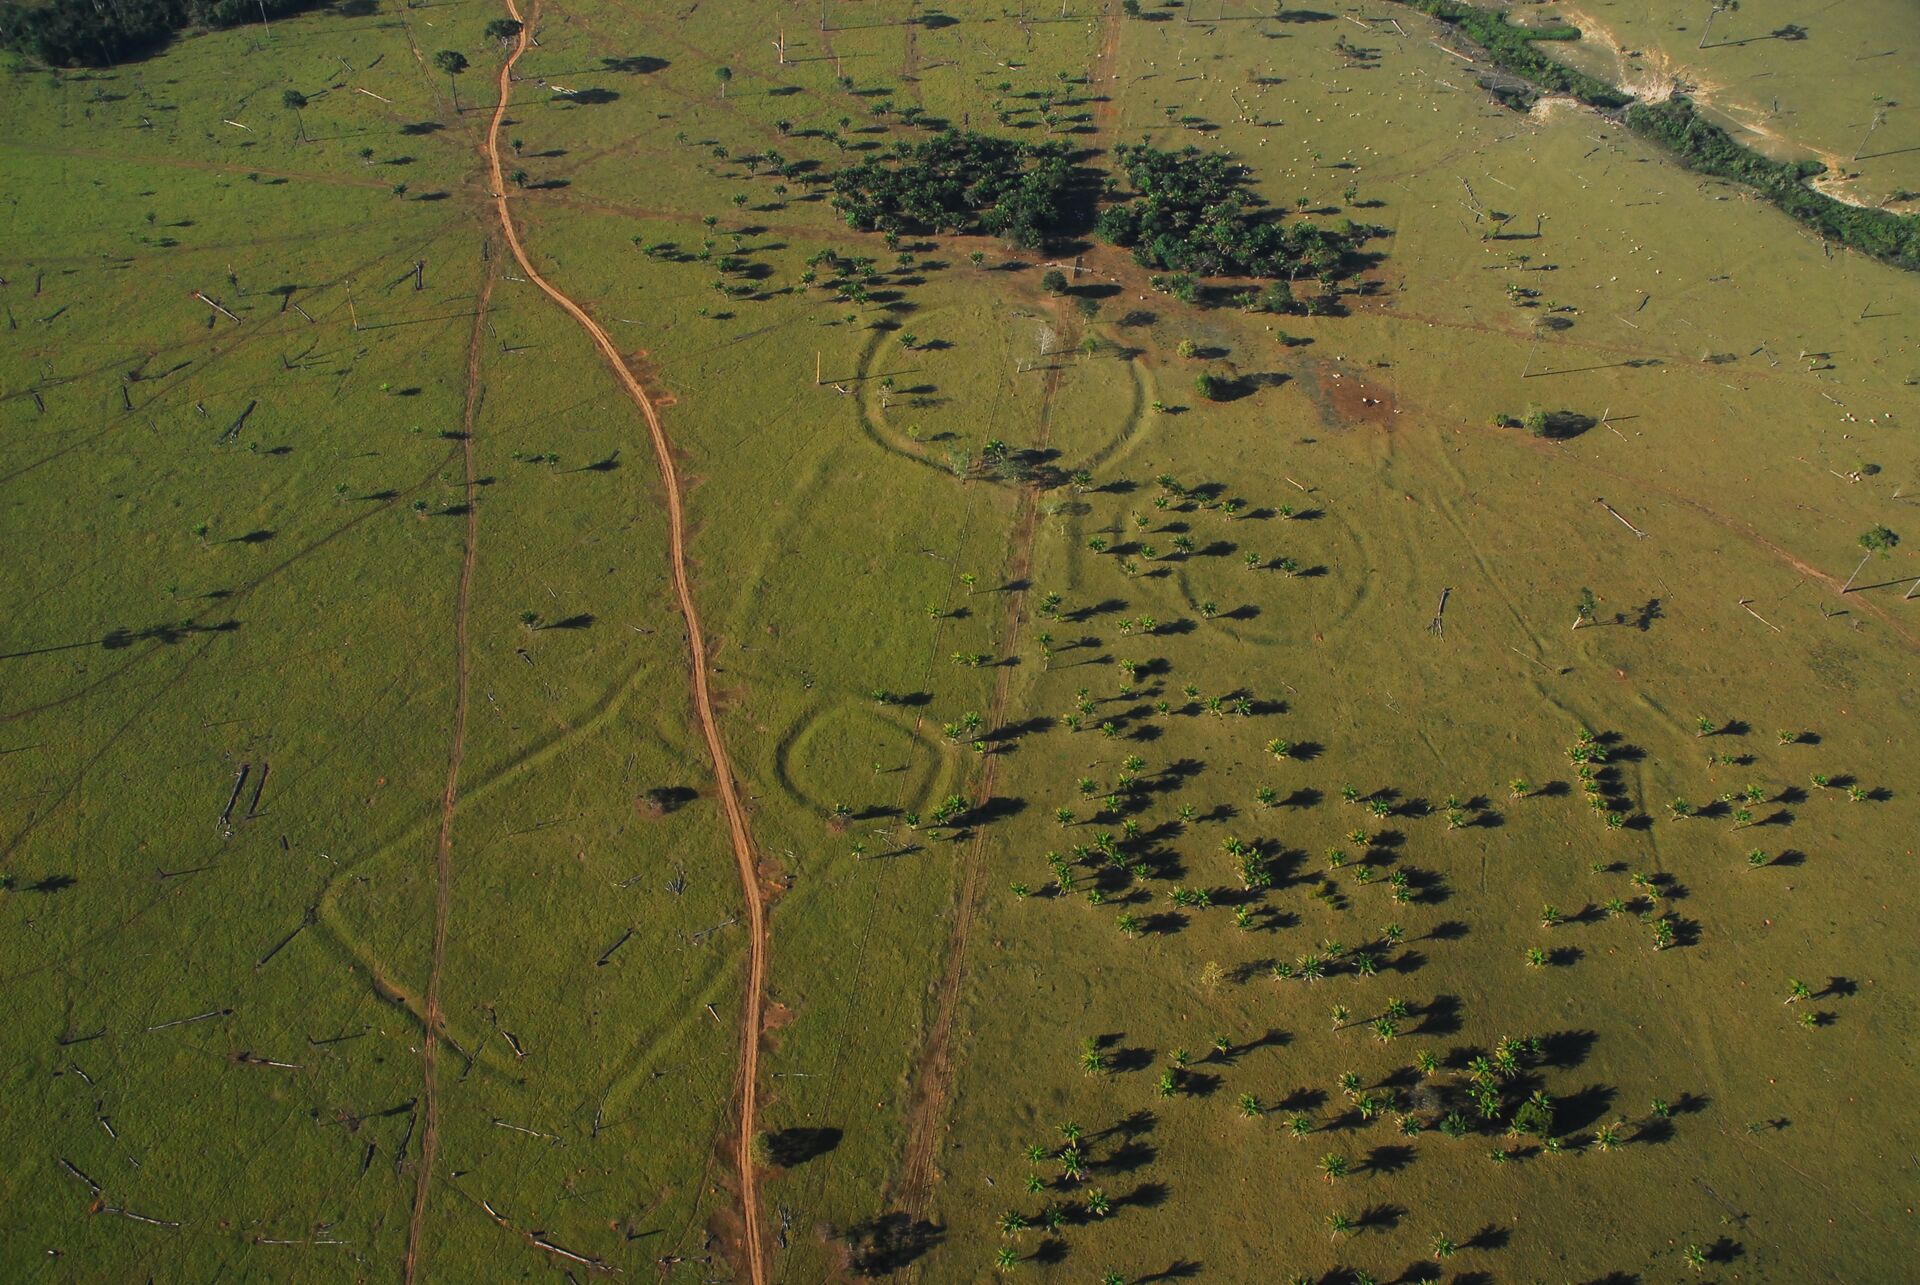 450 'henge' earthworks resembling Stonehenge found in Amazon rainforest using drones. - Sputnik International, 1920, 26.05.2022